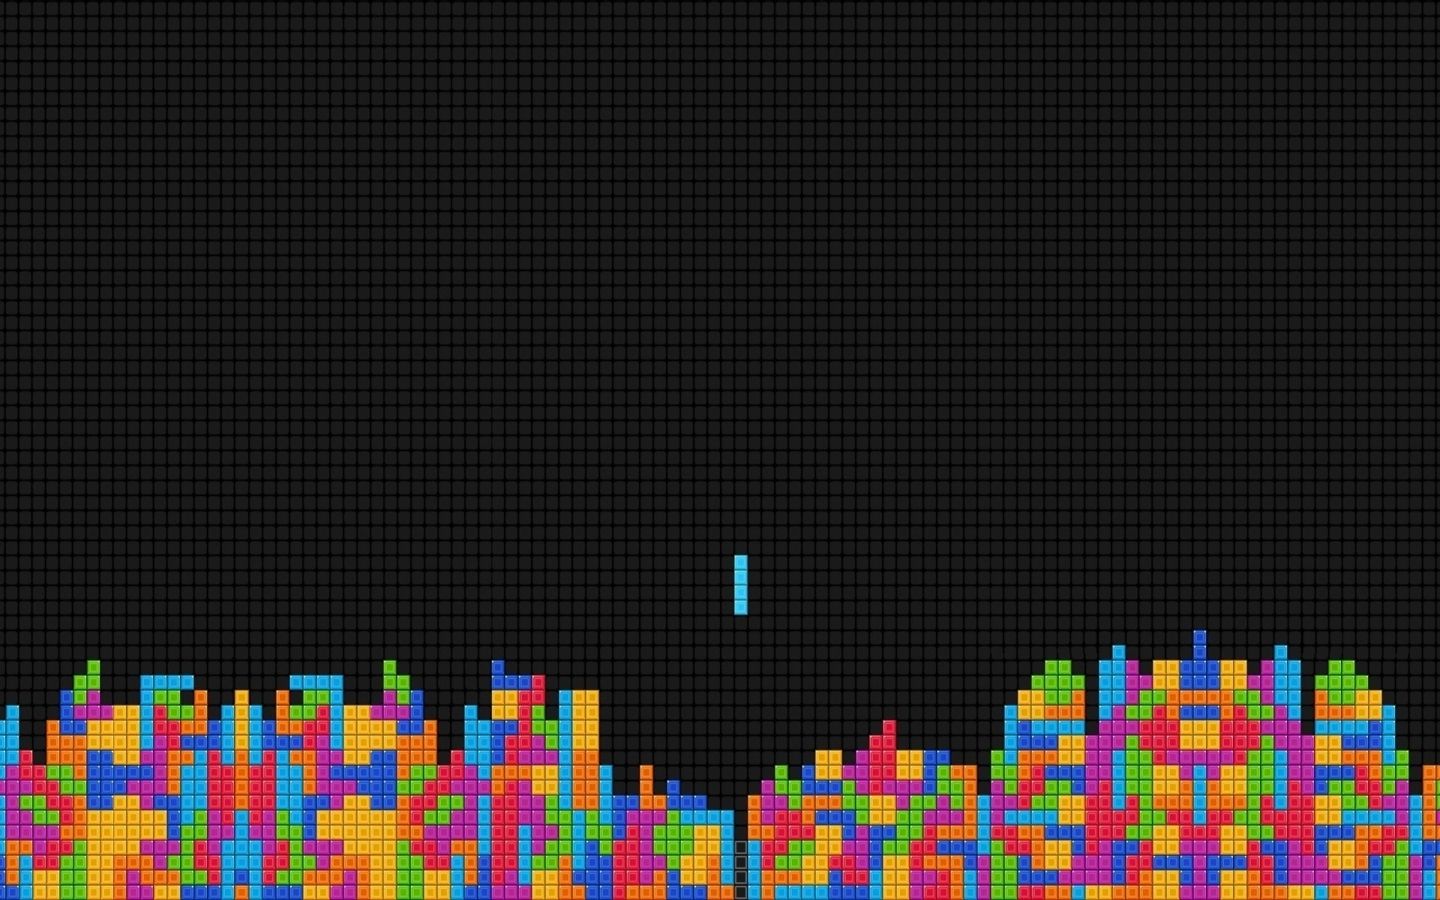 Tetris Mac Wallpaper Download | Free Mac Wallpapers Download